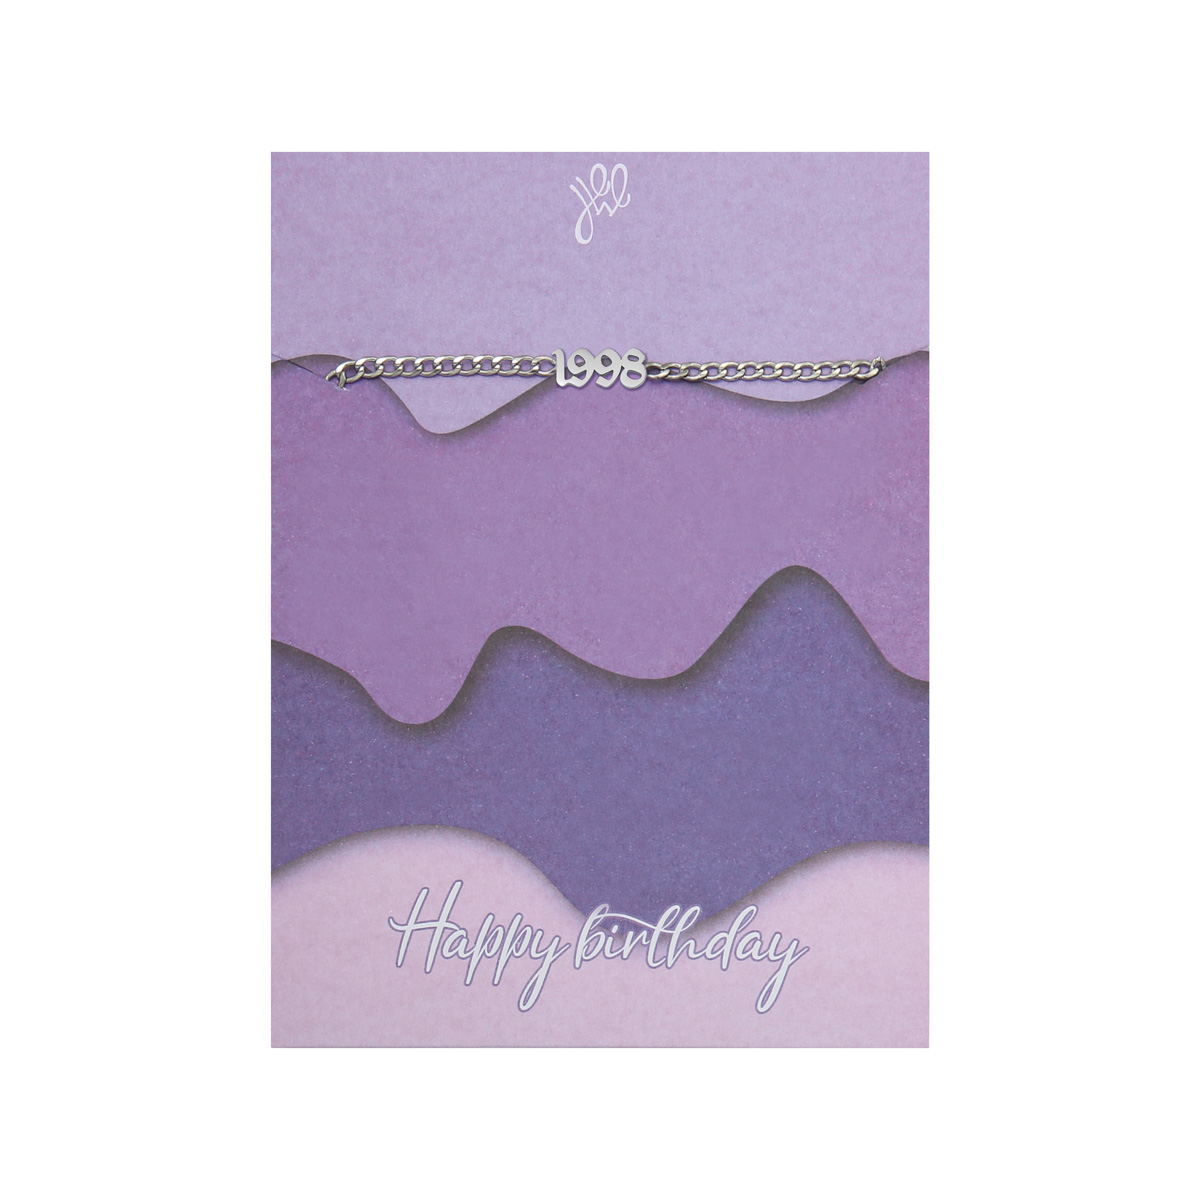 Bracelet Happy Birthday Years - 1987